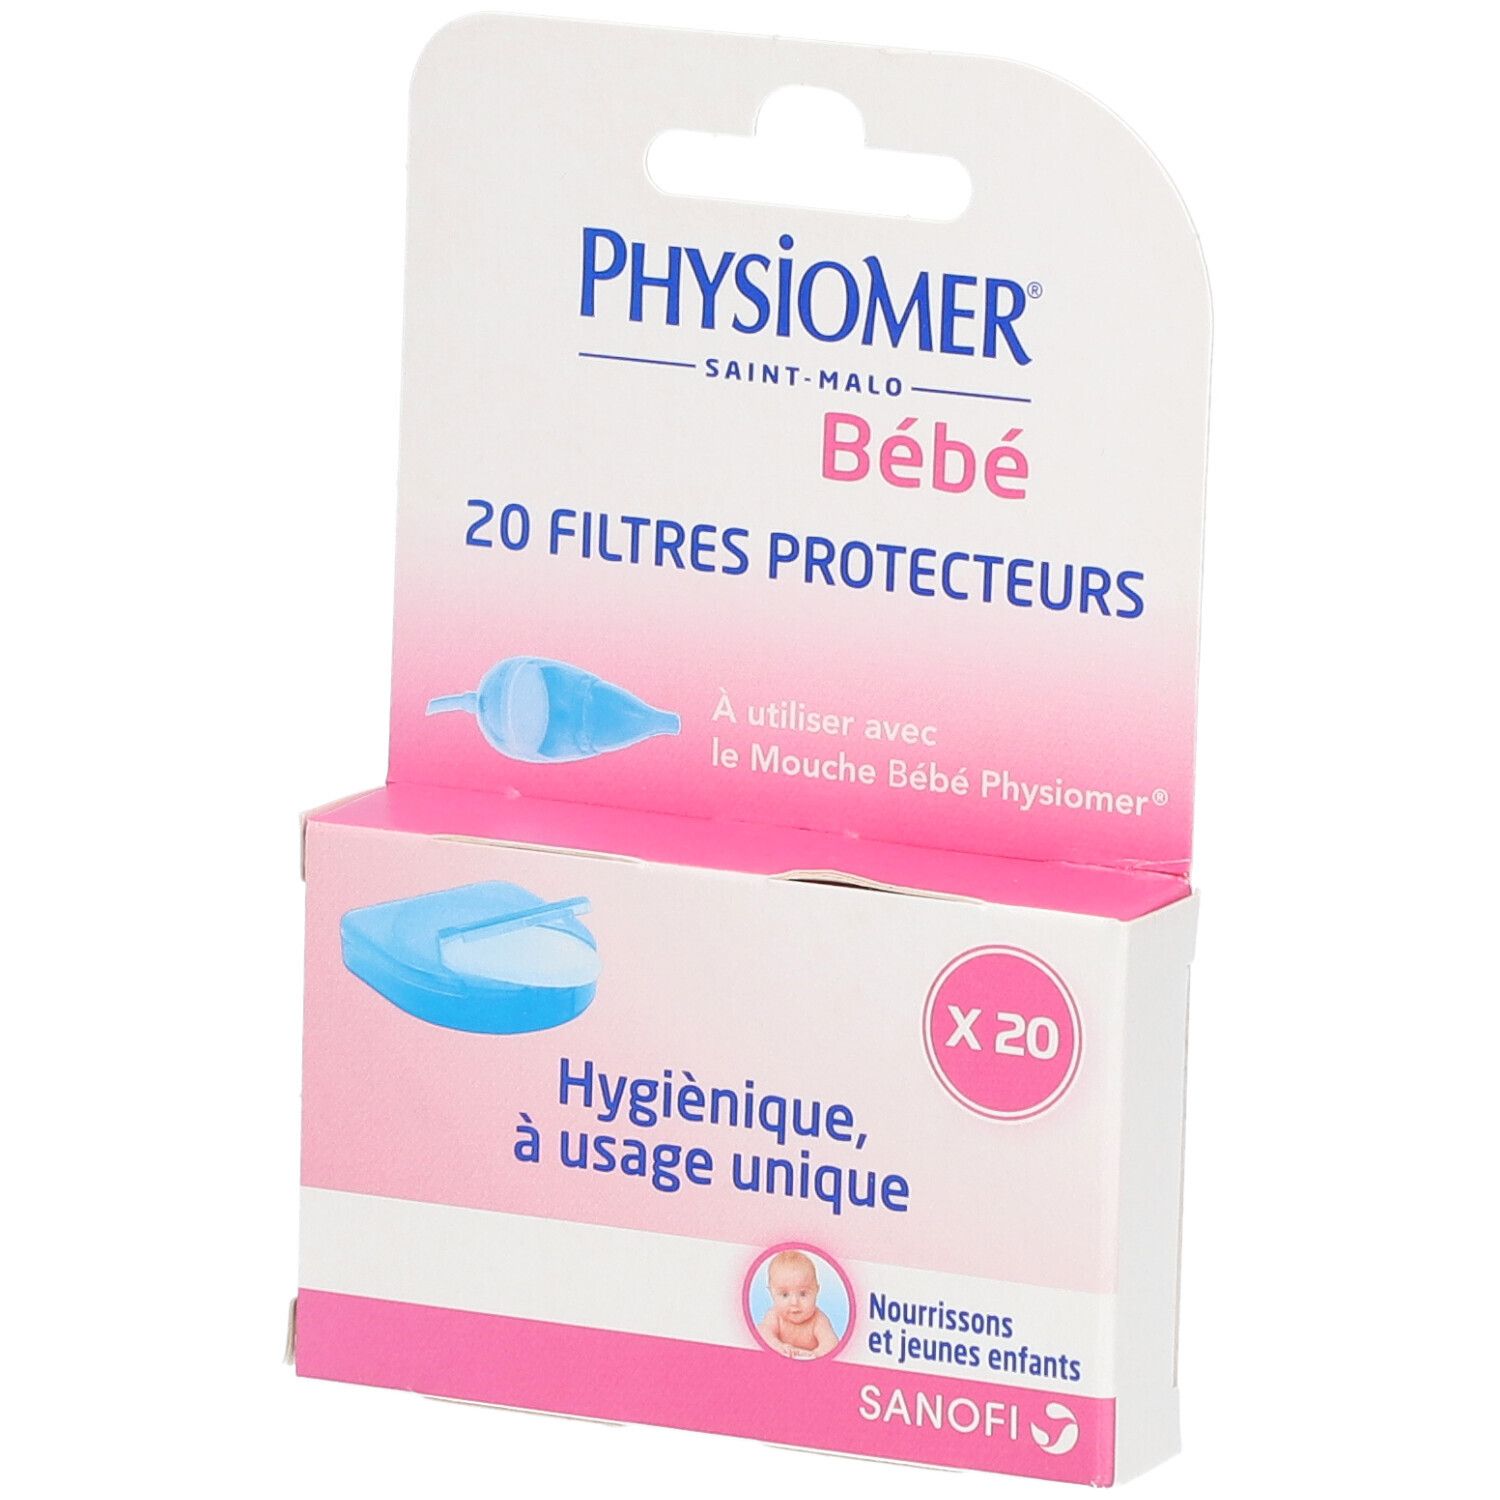 Grande Pharmacie Hyeroise - Parapharmacie Physiomer Mouche-bébé - Hyères